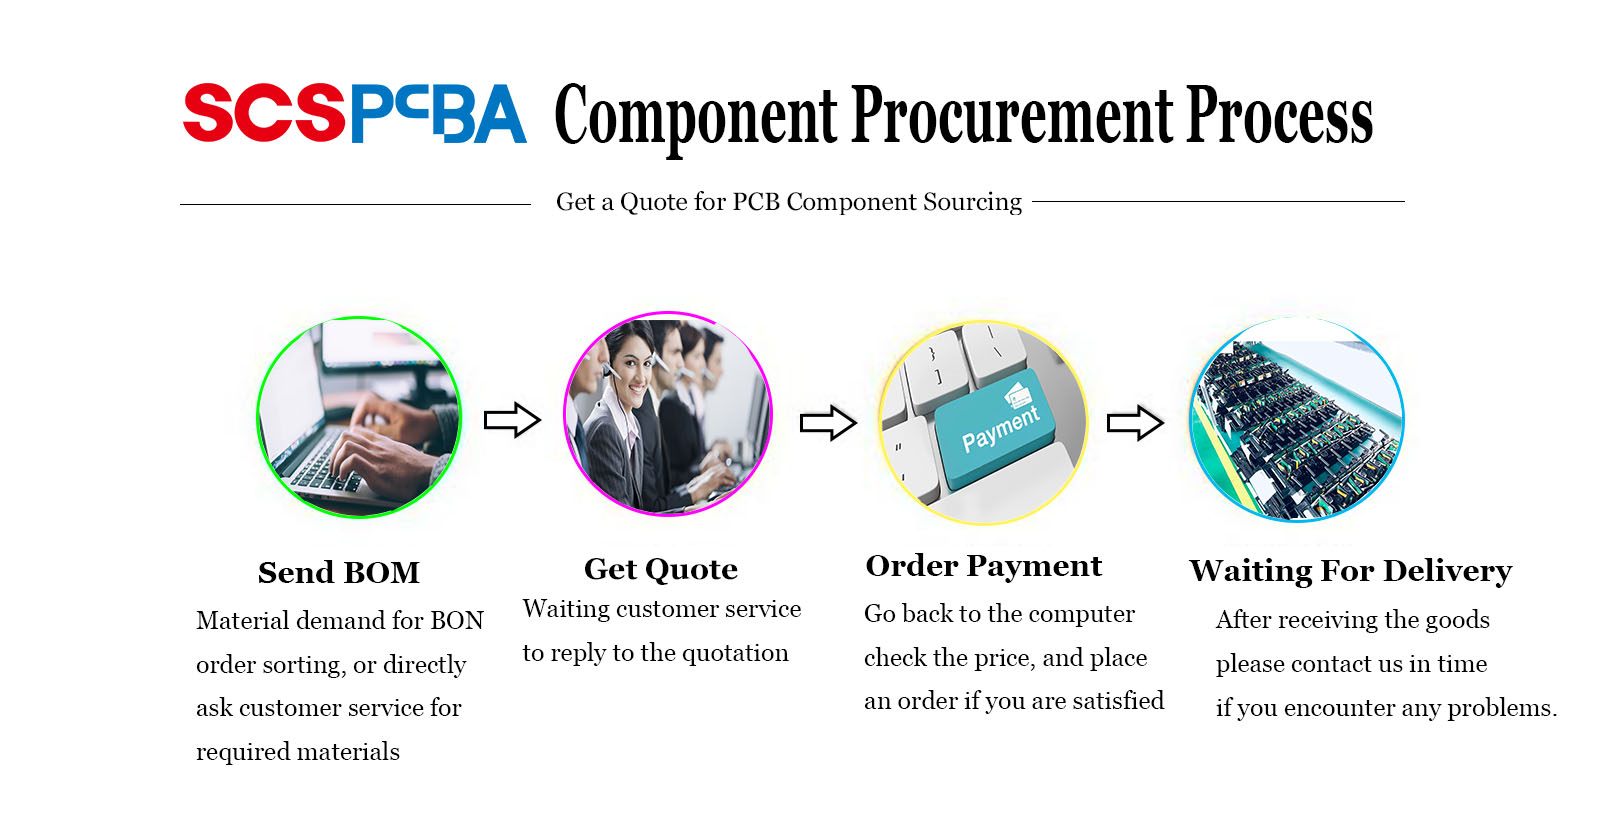 scspcba-component-procurement-process.jpg